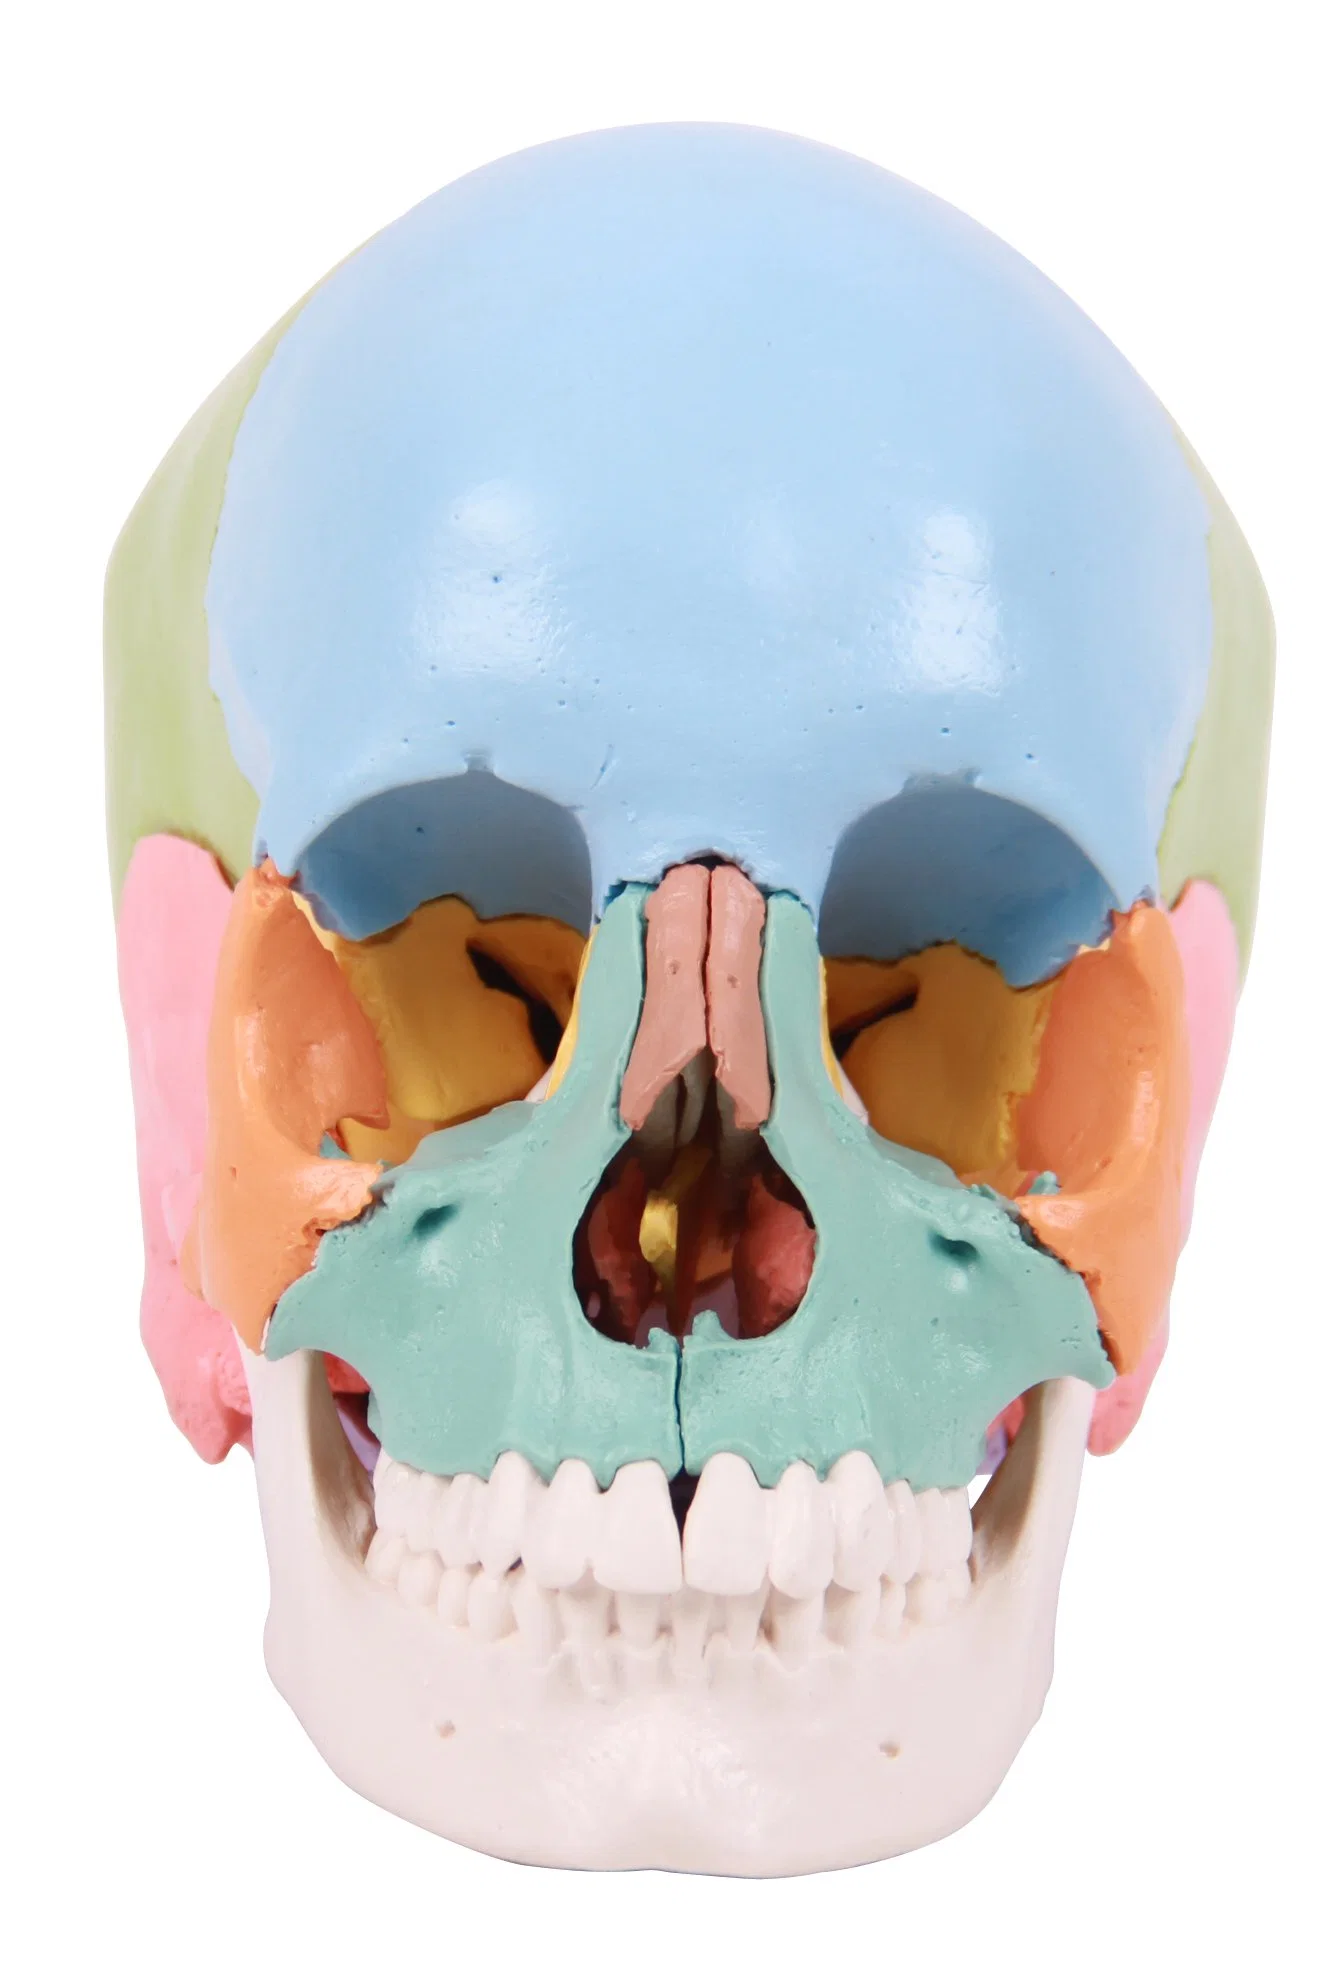 Demostración de la enseñanza Versión coloreada Enseñanza humana esqueleto Beauchene cráneo 22 Modelos de tamaño natural de huesos individuales